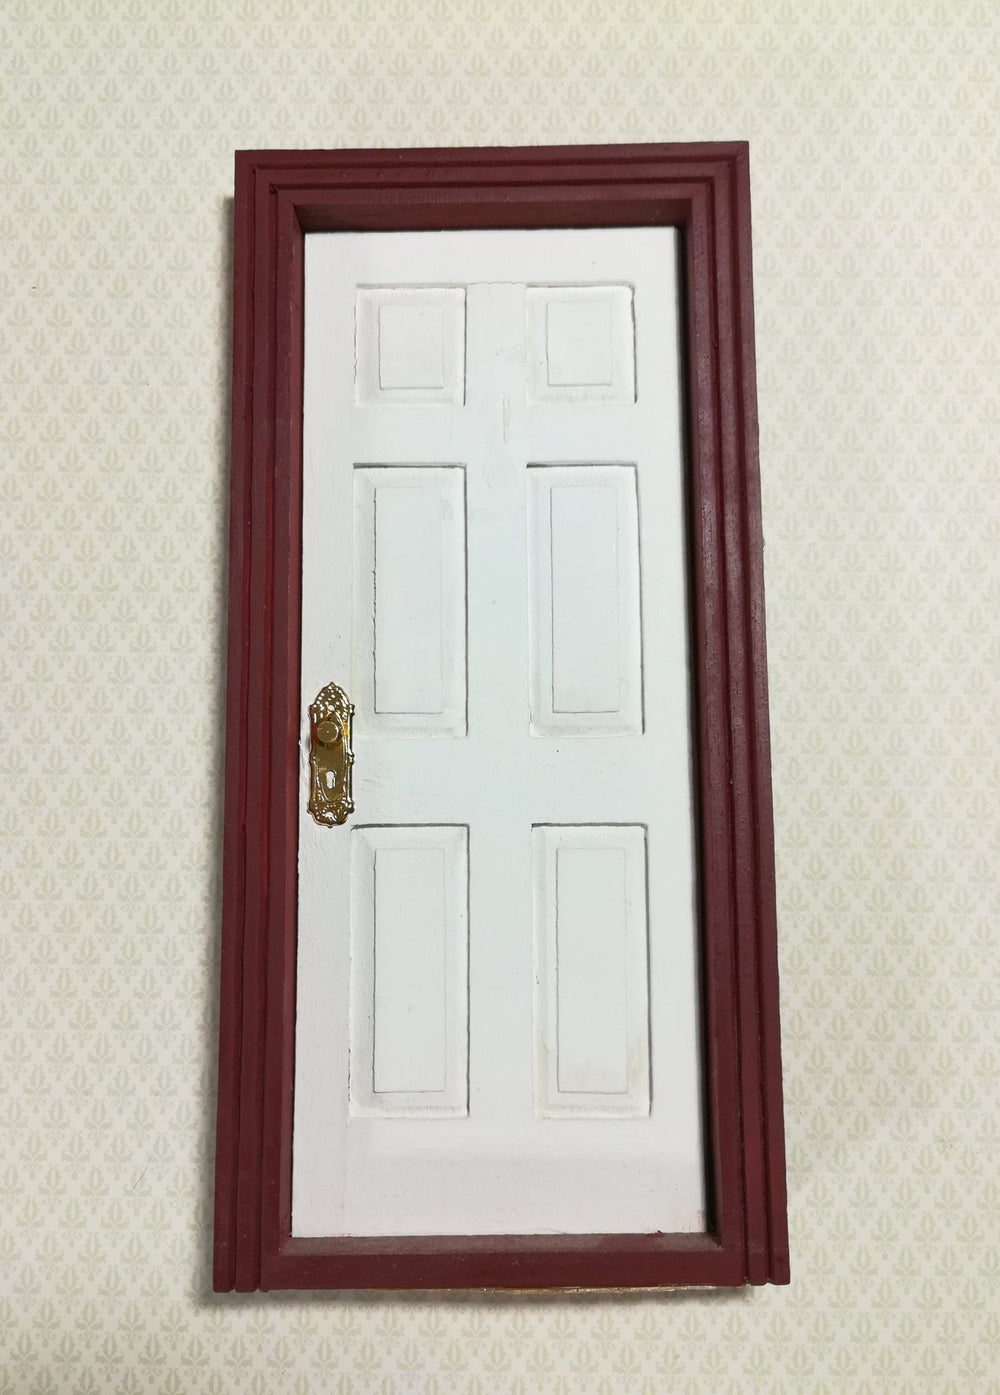 Dollhouse Doorknobs Fancy Gold 1 Set Metal 1:12 Scale Miniature by Houseworks 1139 - Miniature Crush